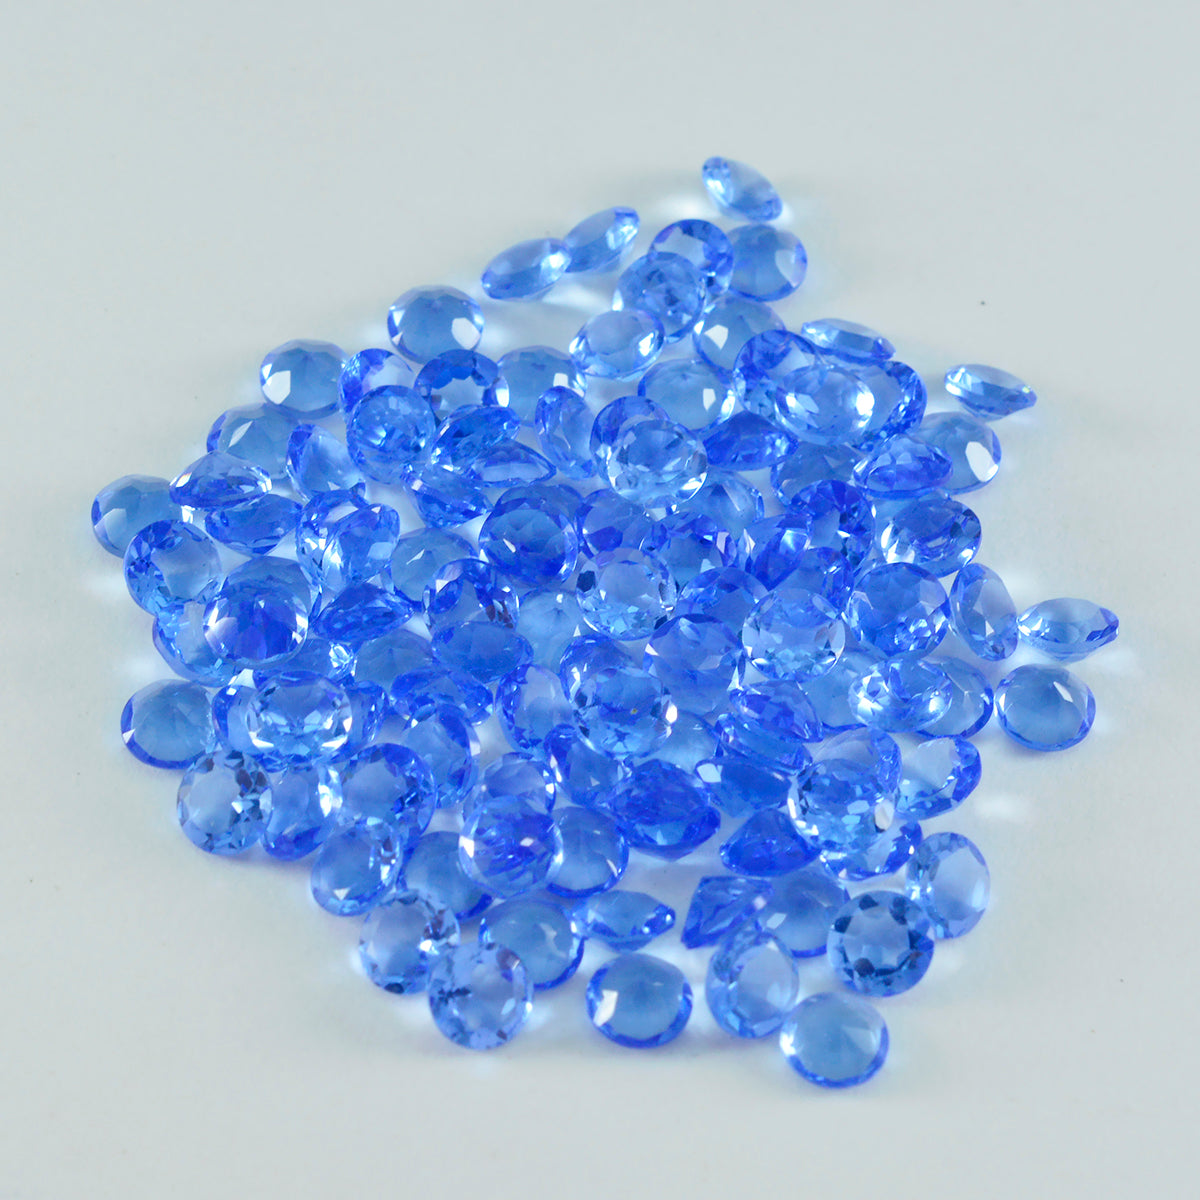 Riyogems 1 pieza zafiro azul CZ facetado 3x3 mm forma redonda gema de calidad fantástica